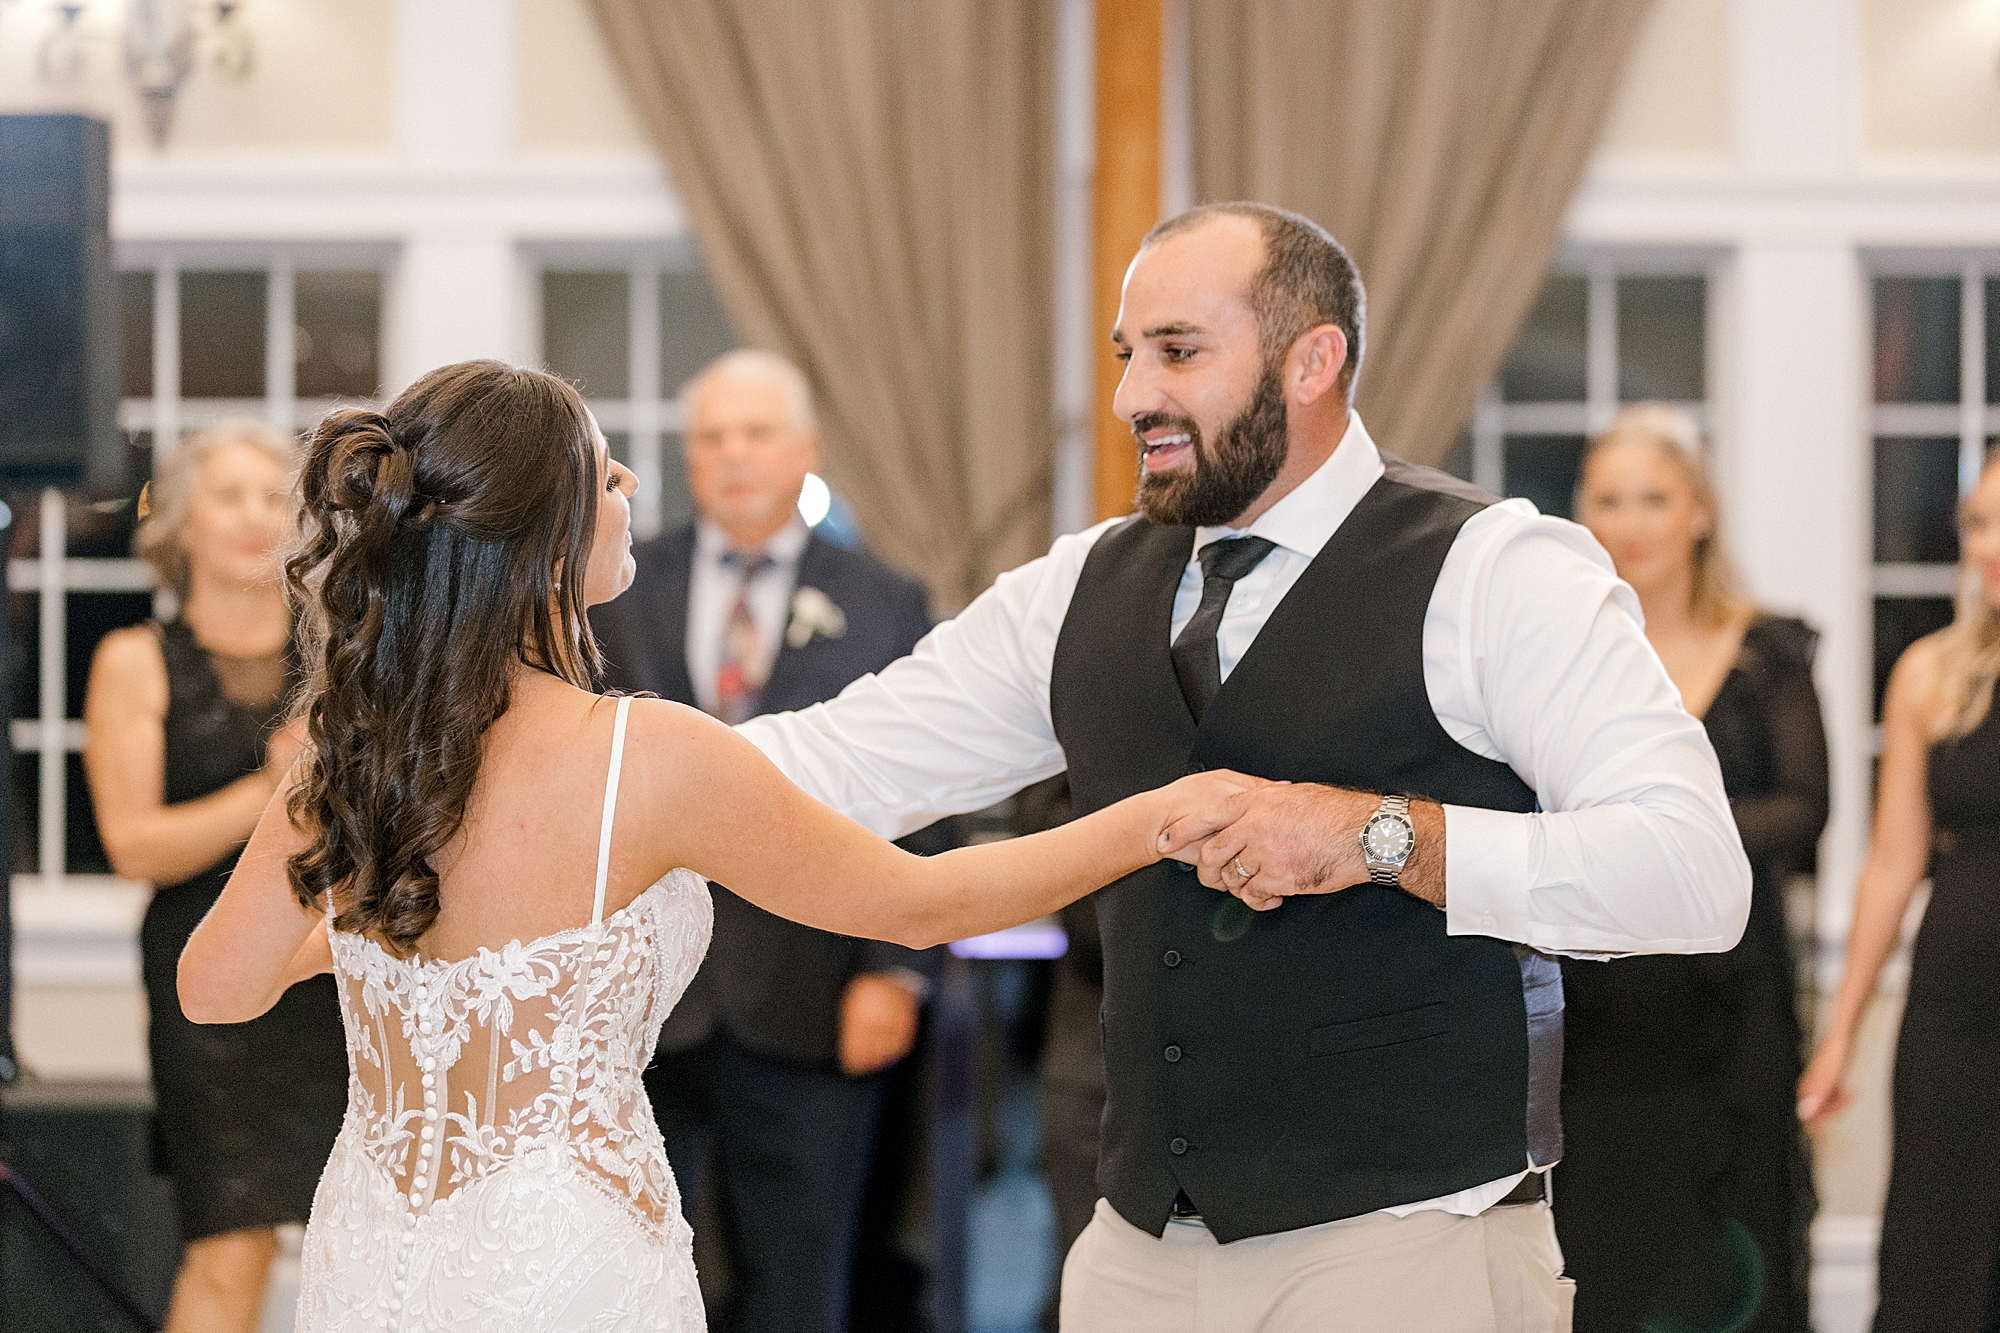 newlyweds perform choreographed dance during LBI wedding reception